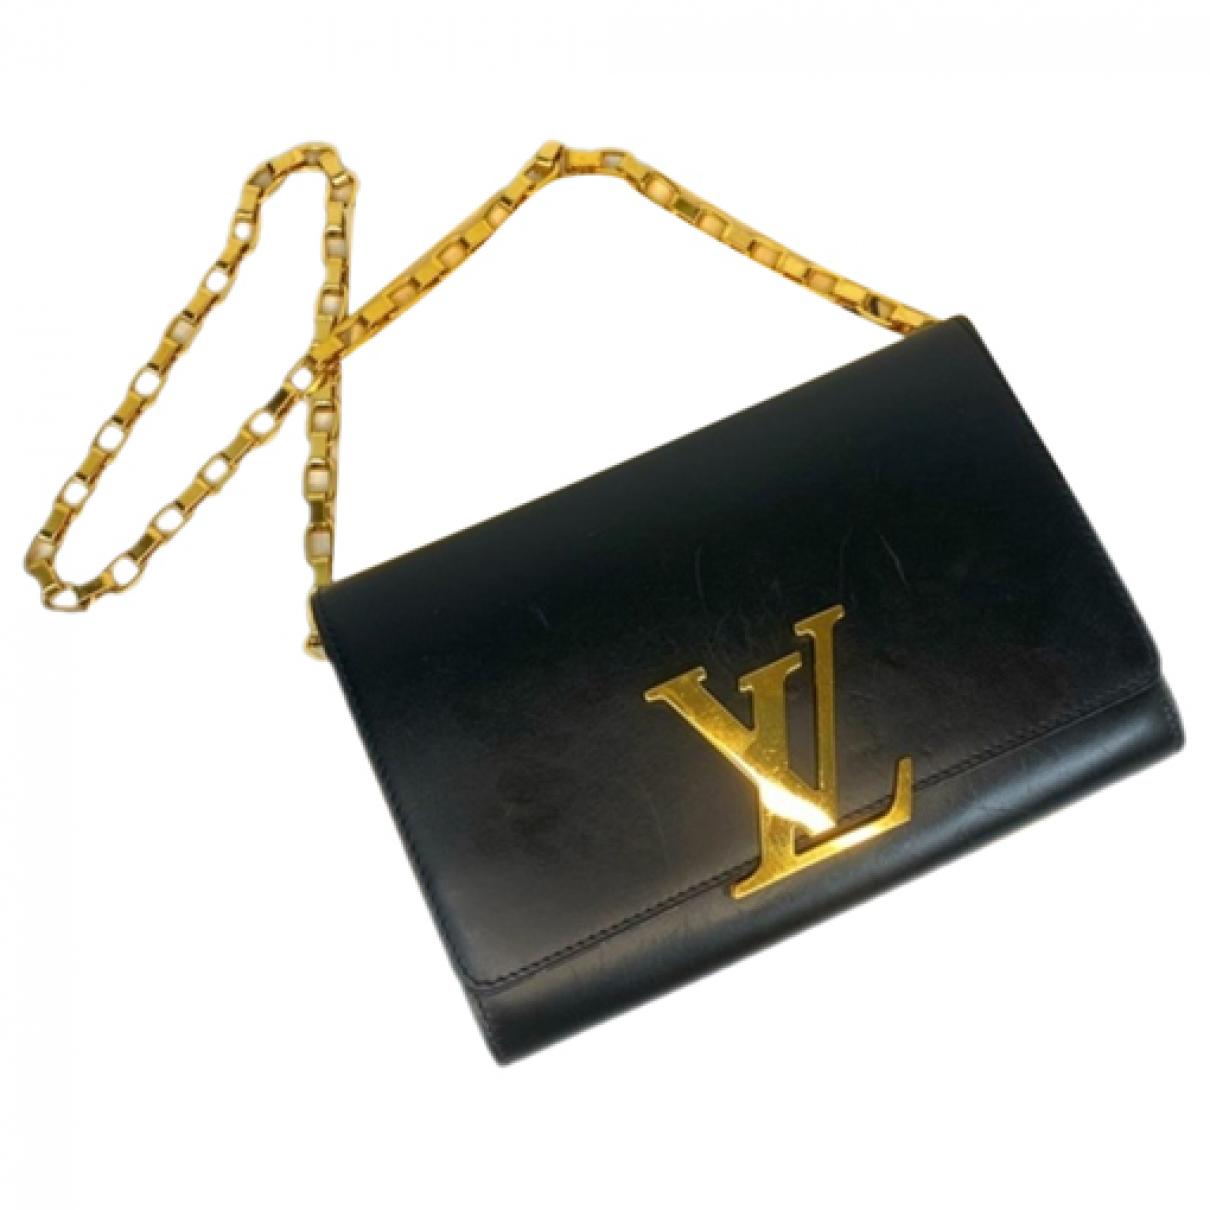 LOUIS VUITTON Chain Louise GM Calfskin Leather Shoulder Bag Black